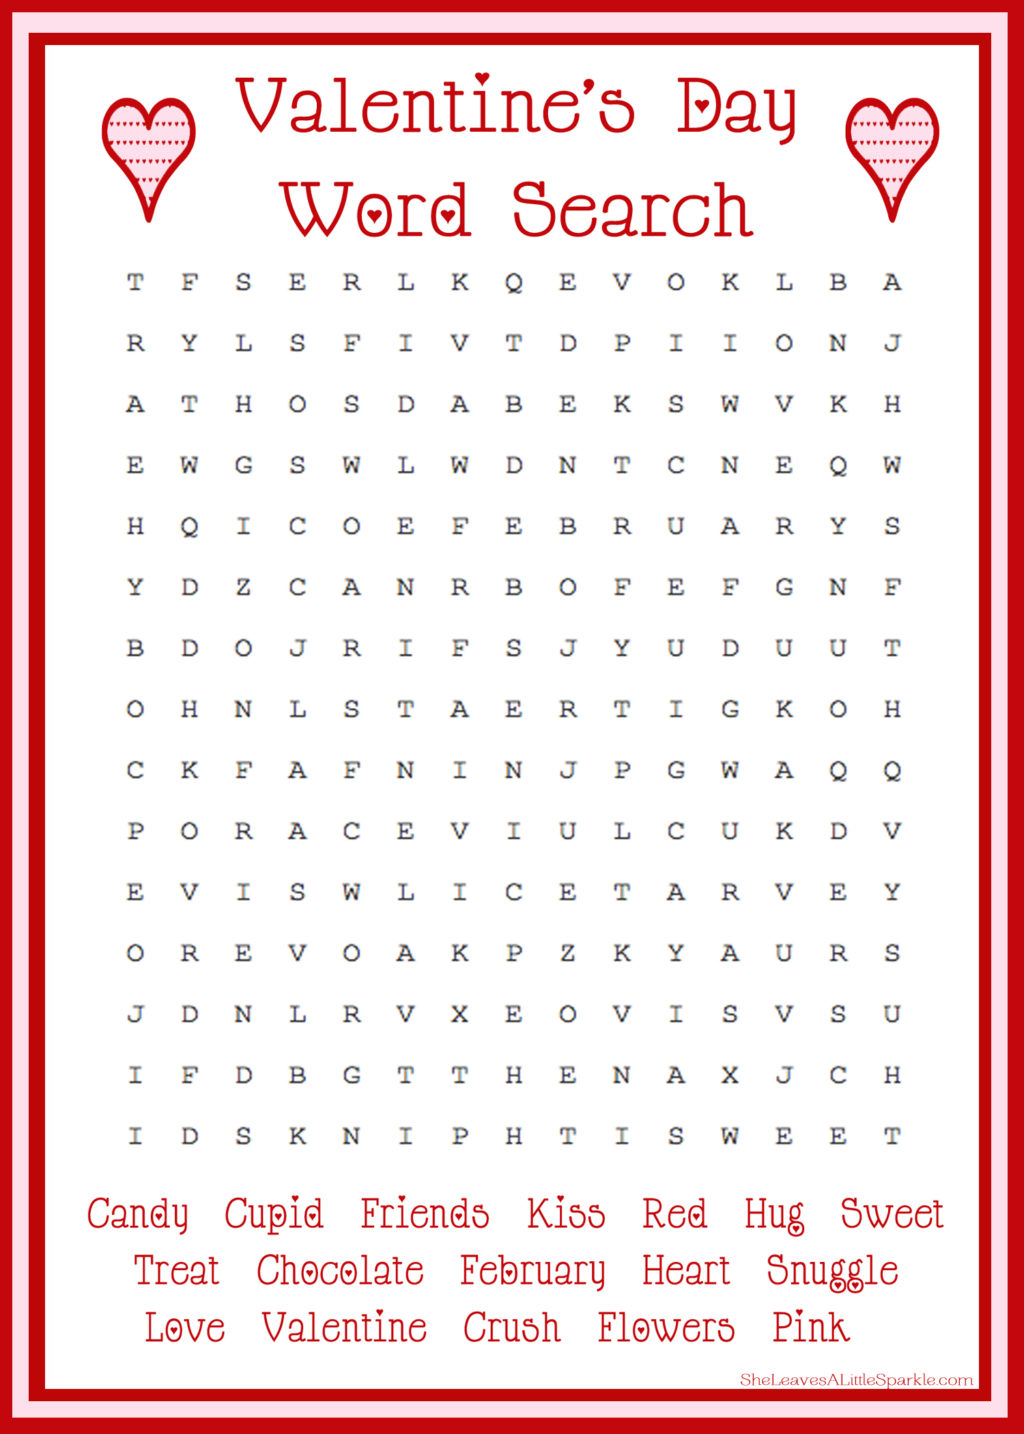 day-8-valentine-s-day-word-search-summer-adams